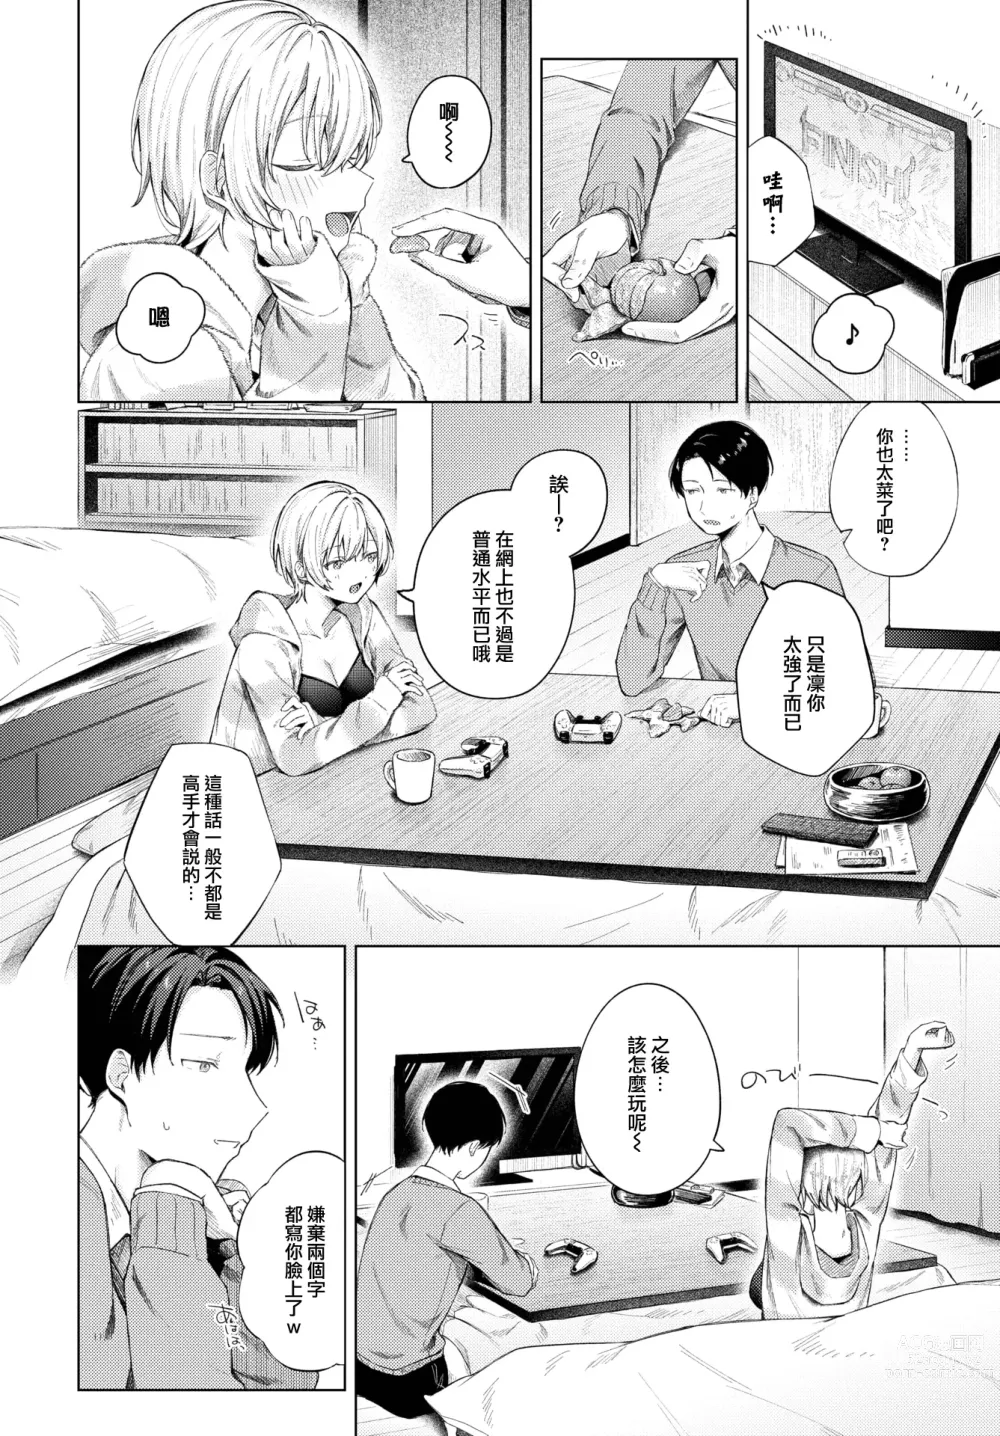 Page 5 of manga Fuyugomori